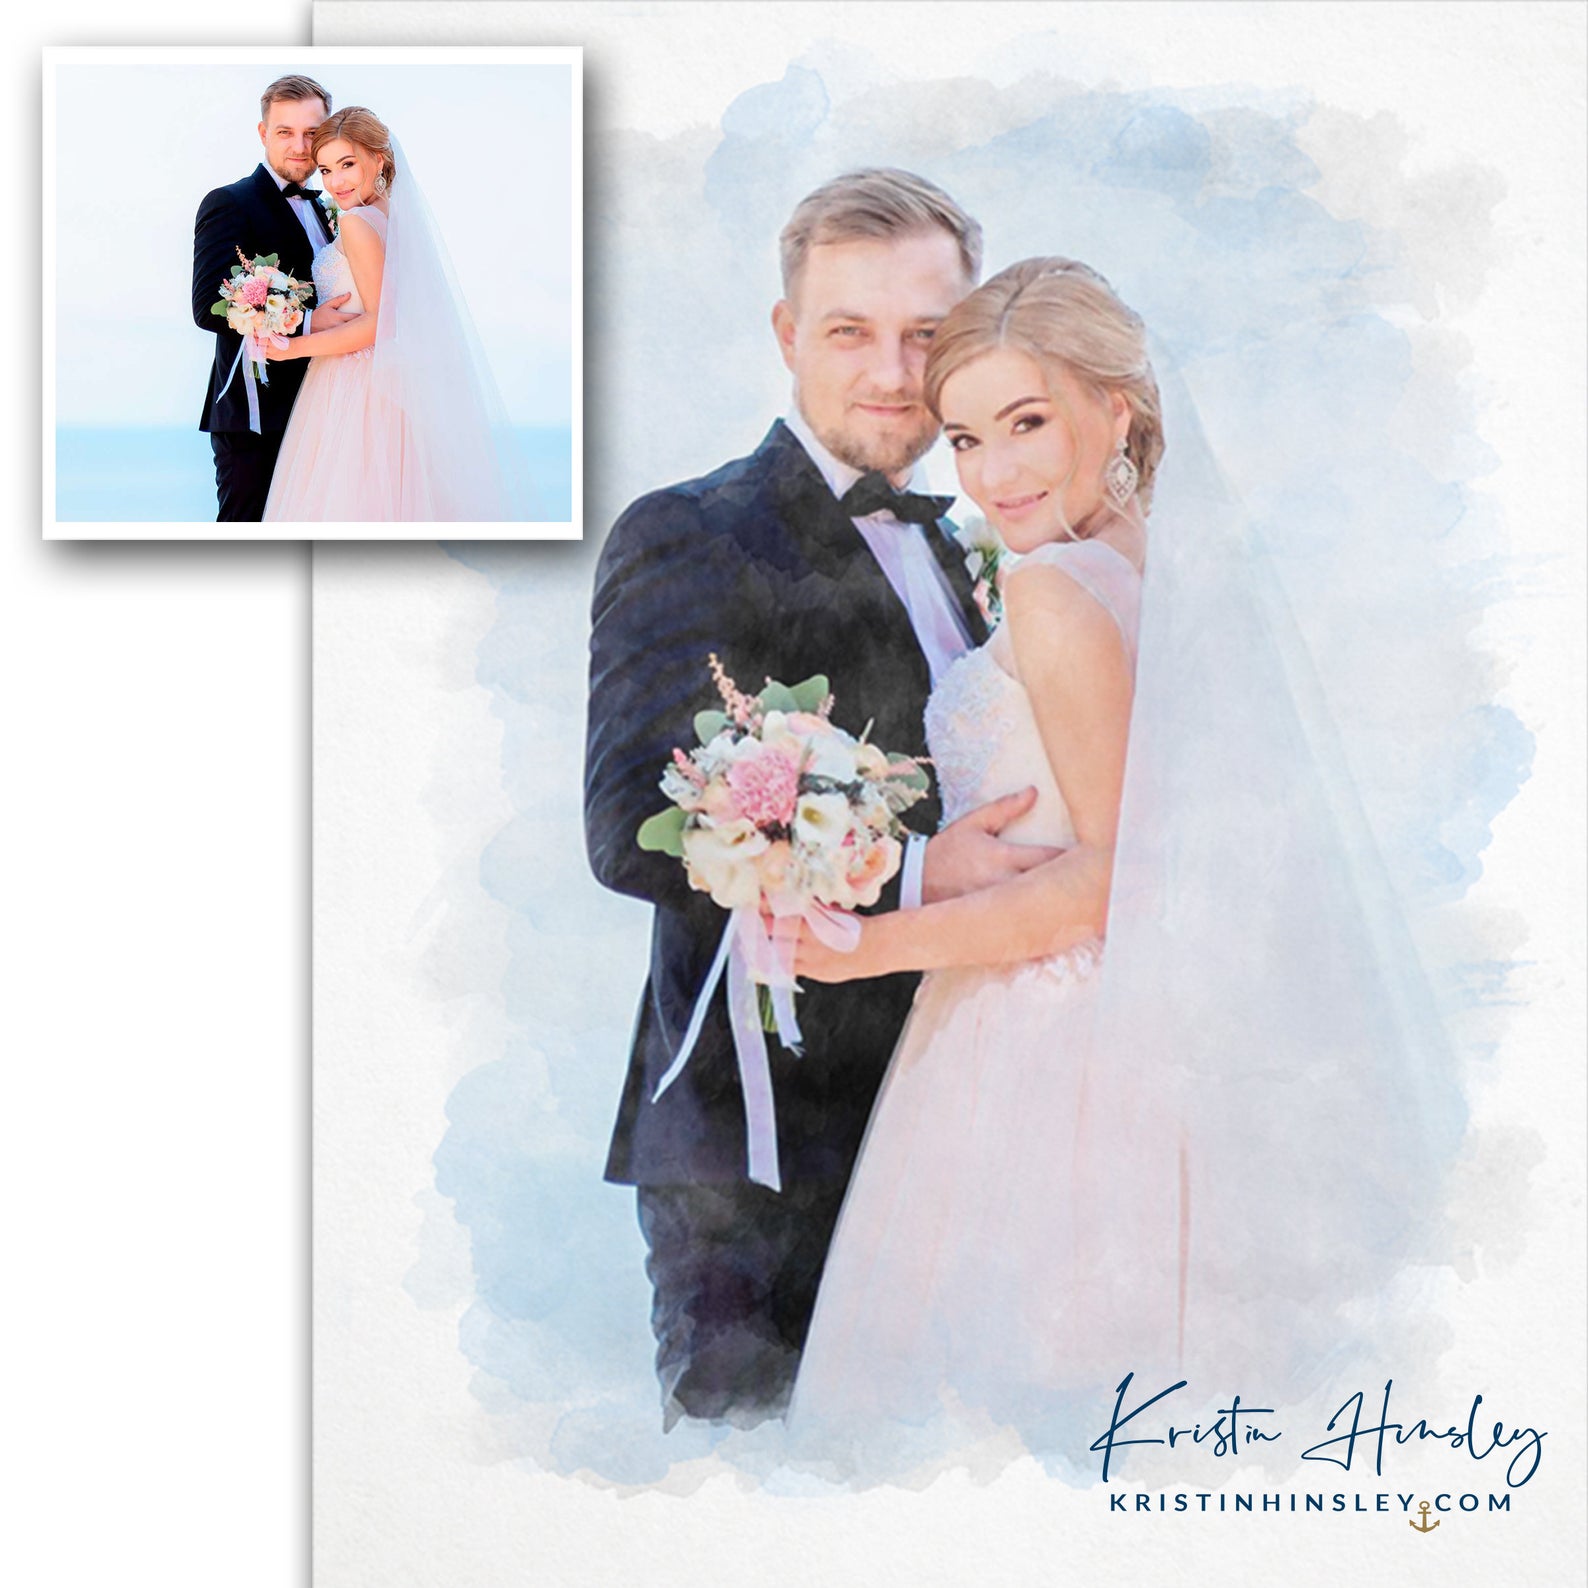 https://kristinhinsley.com/wp-content/uploads/2021/03/Wedding-Gift-for-couple-anniversary-Watercolor-Portrait.jpg